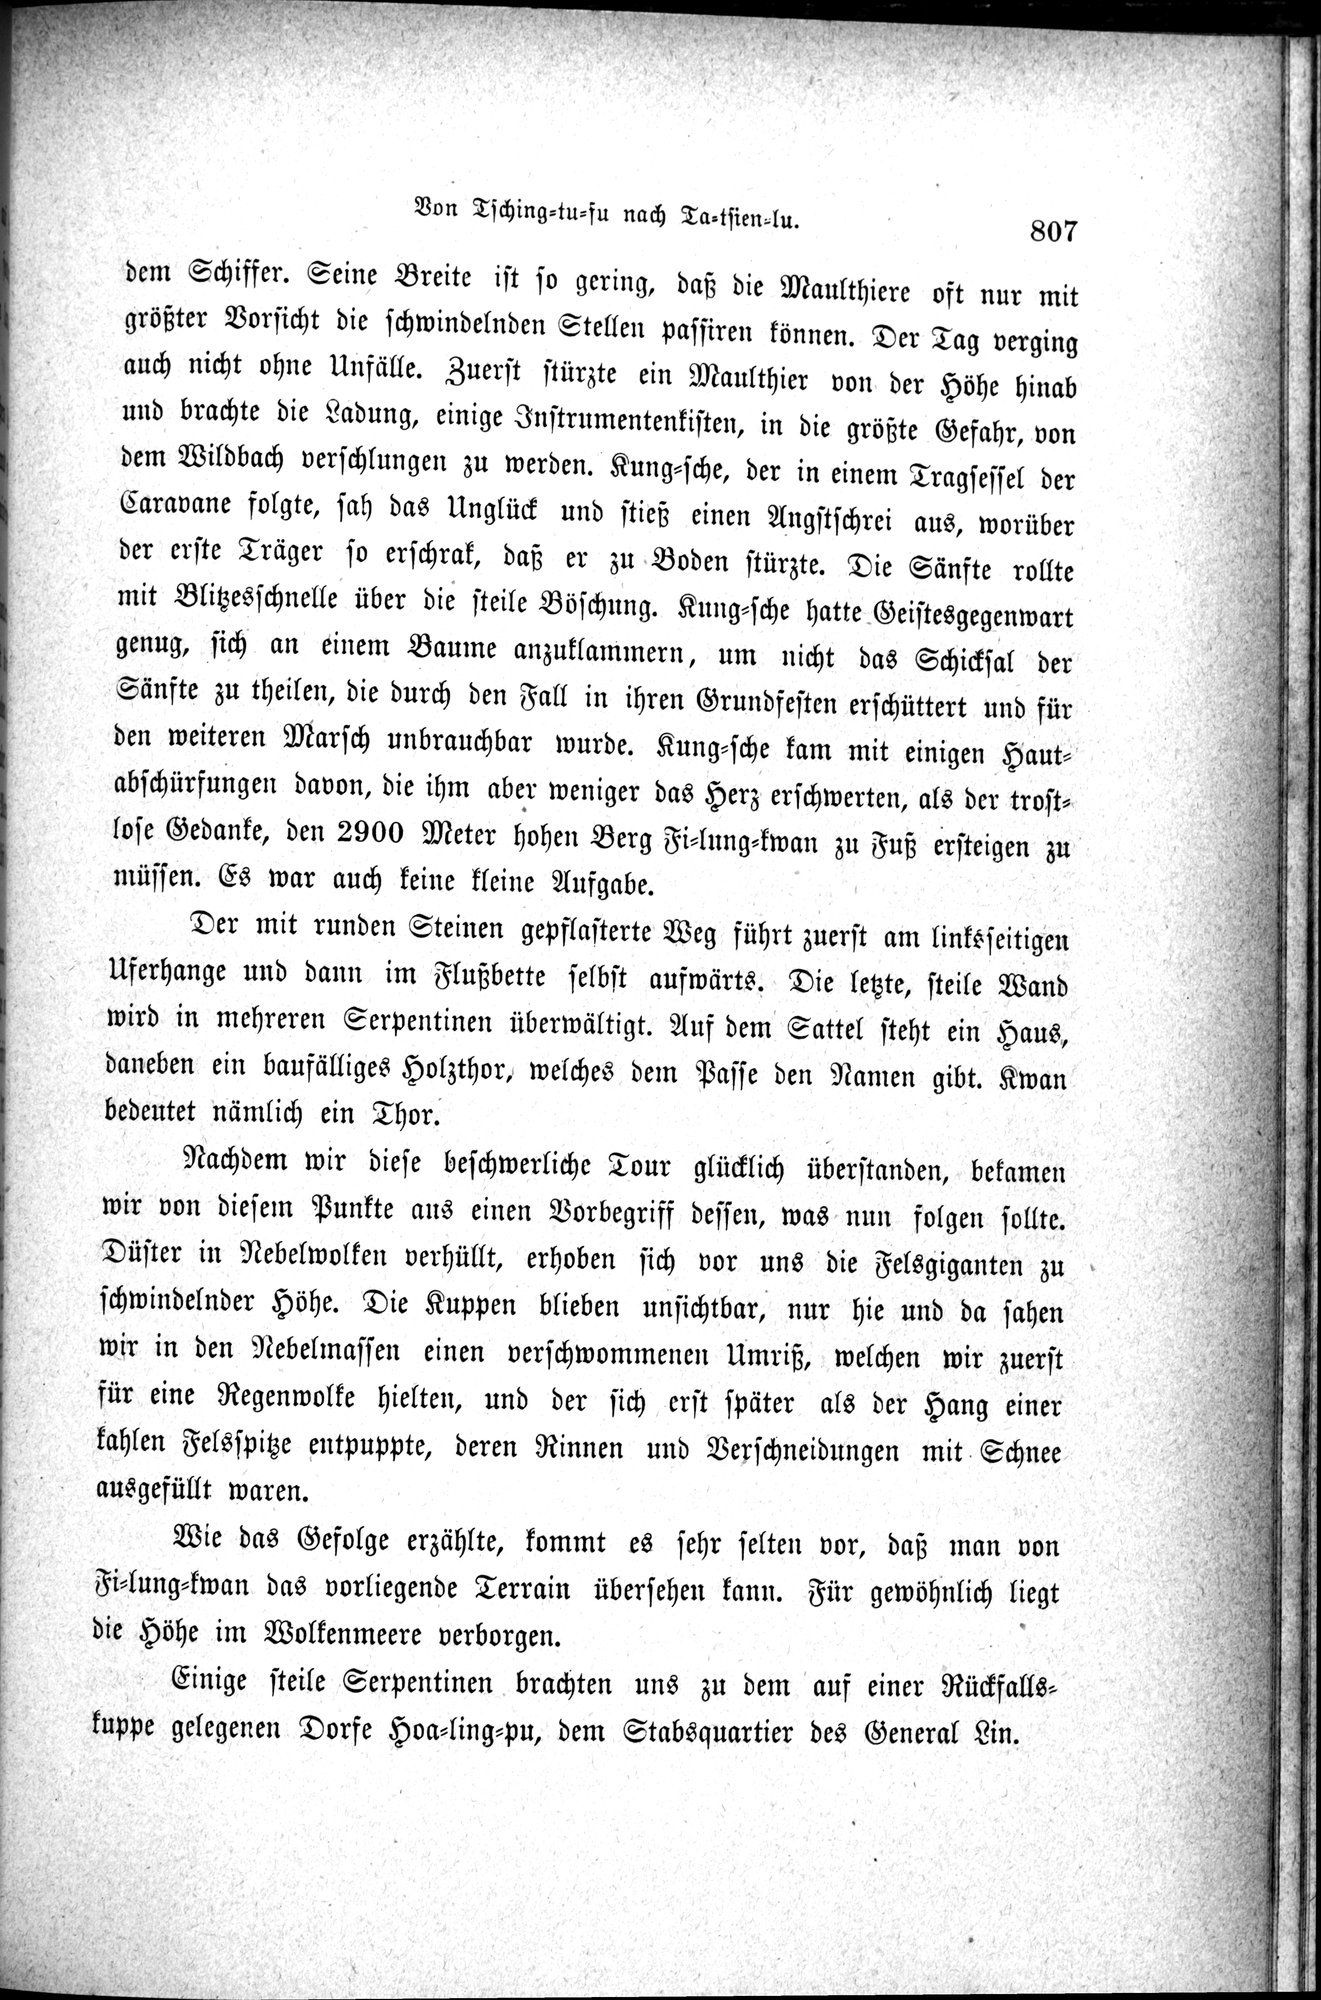 Im fernen Osten : vol.1 / Page 831 (Grayscale High Resolution Image)